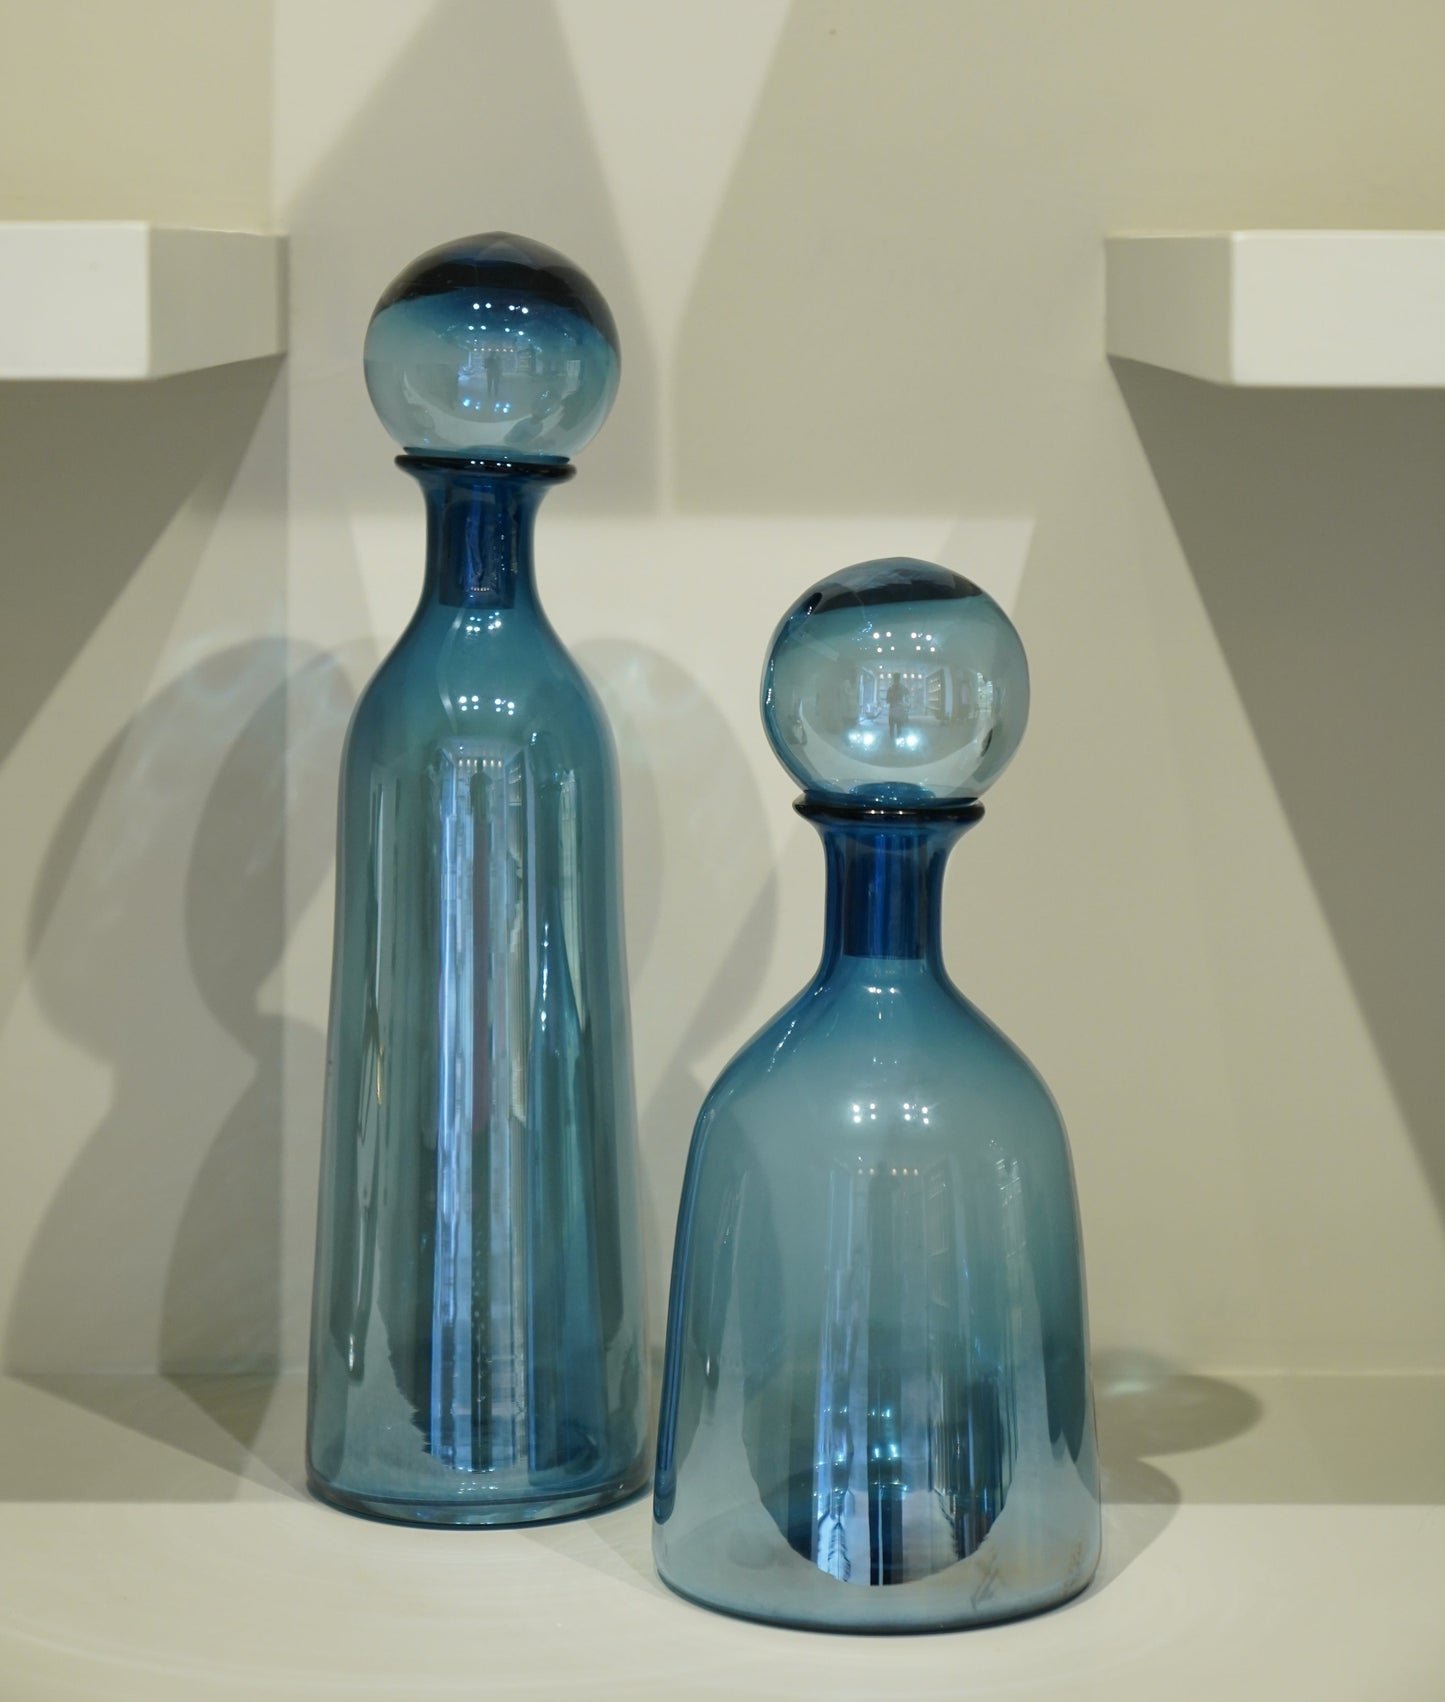 Amina Blue Glass Decorative Showpiece (Small)